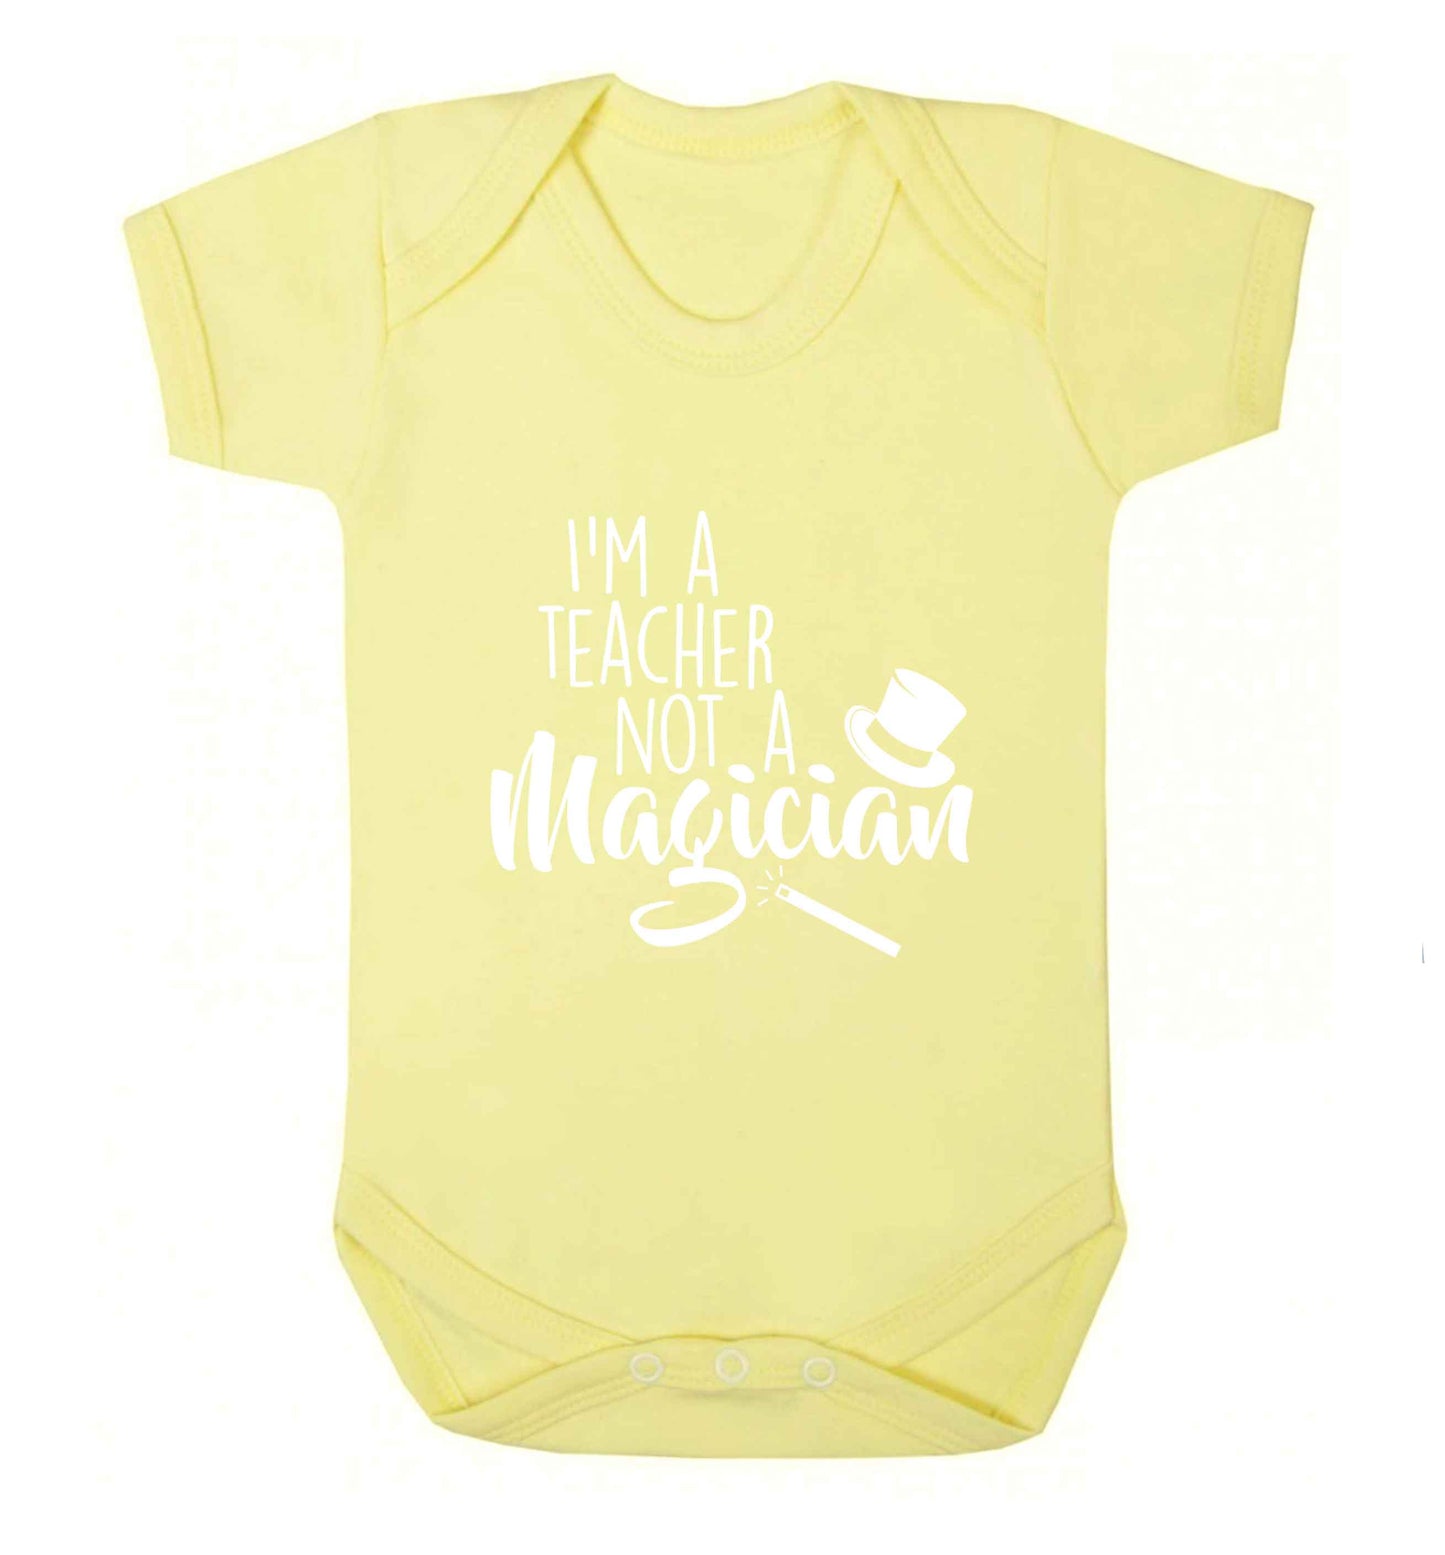 I'm a teacher not a magician baby vest pale yellow 18-24 months